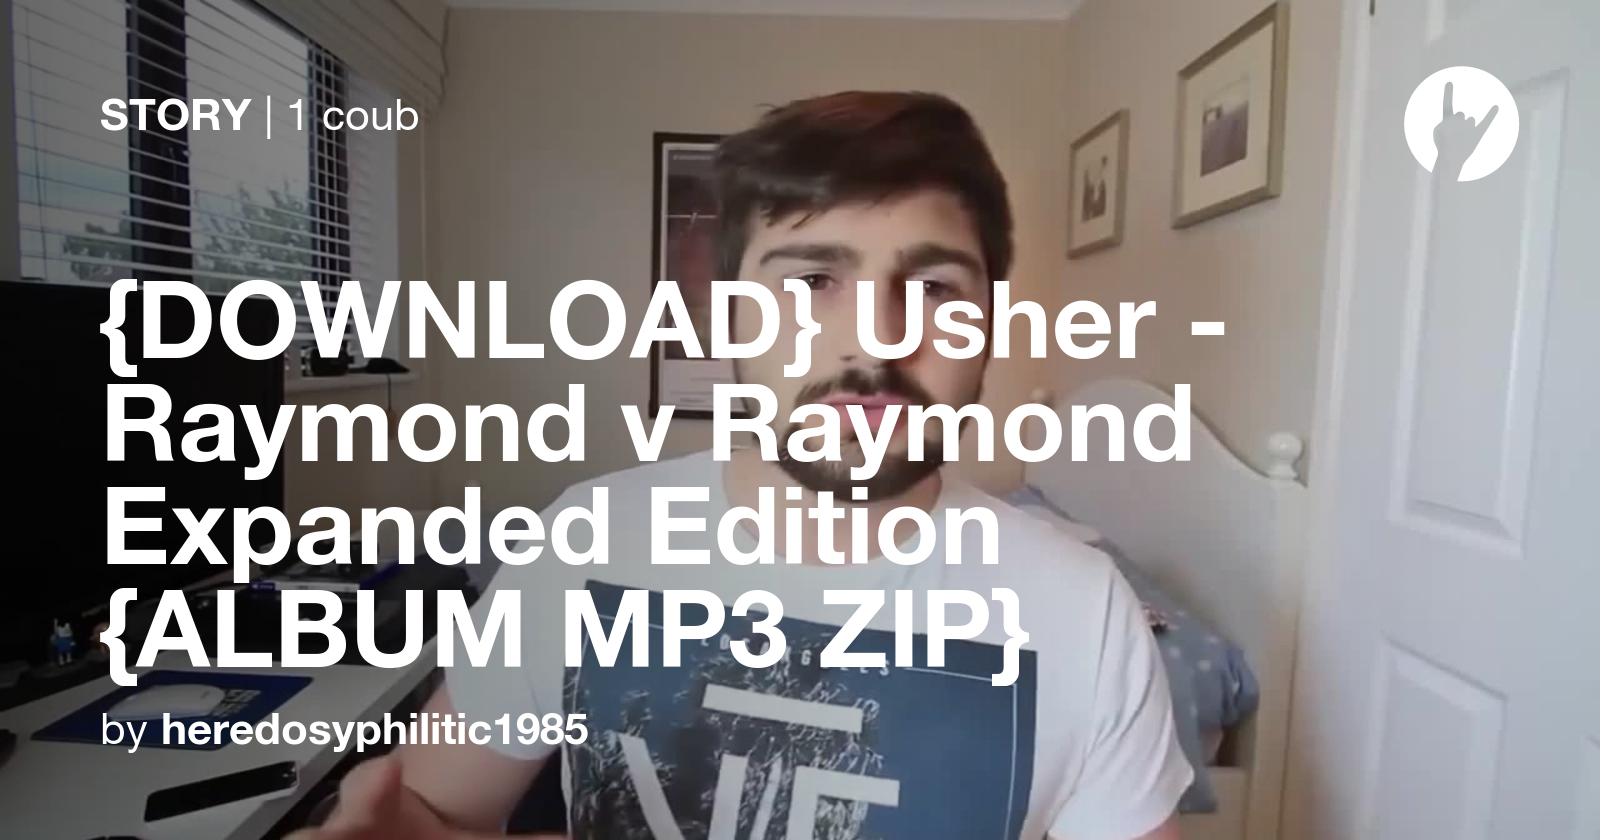 raymond vs raymond usher uploaded